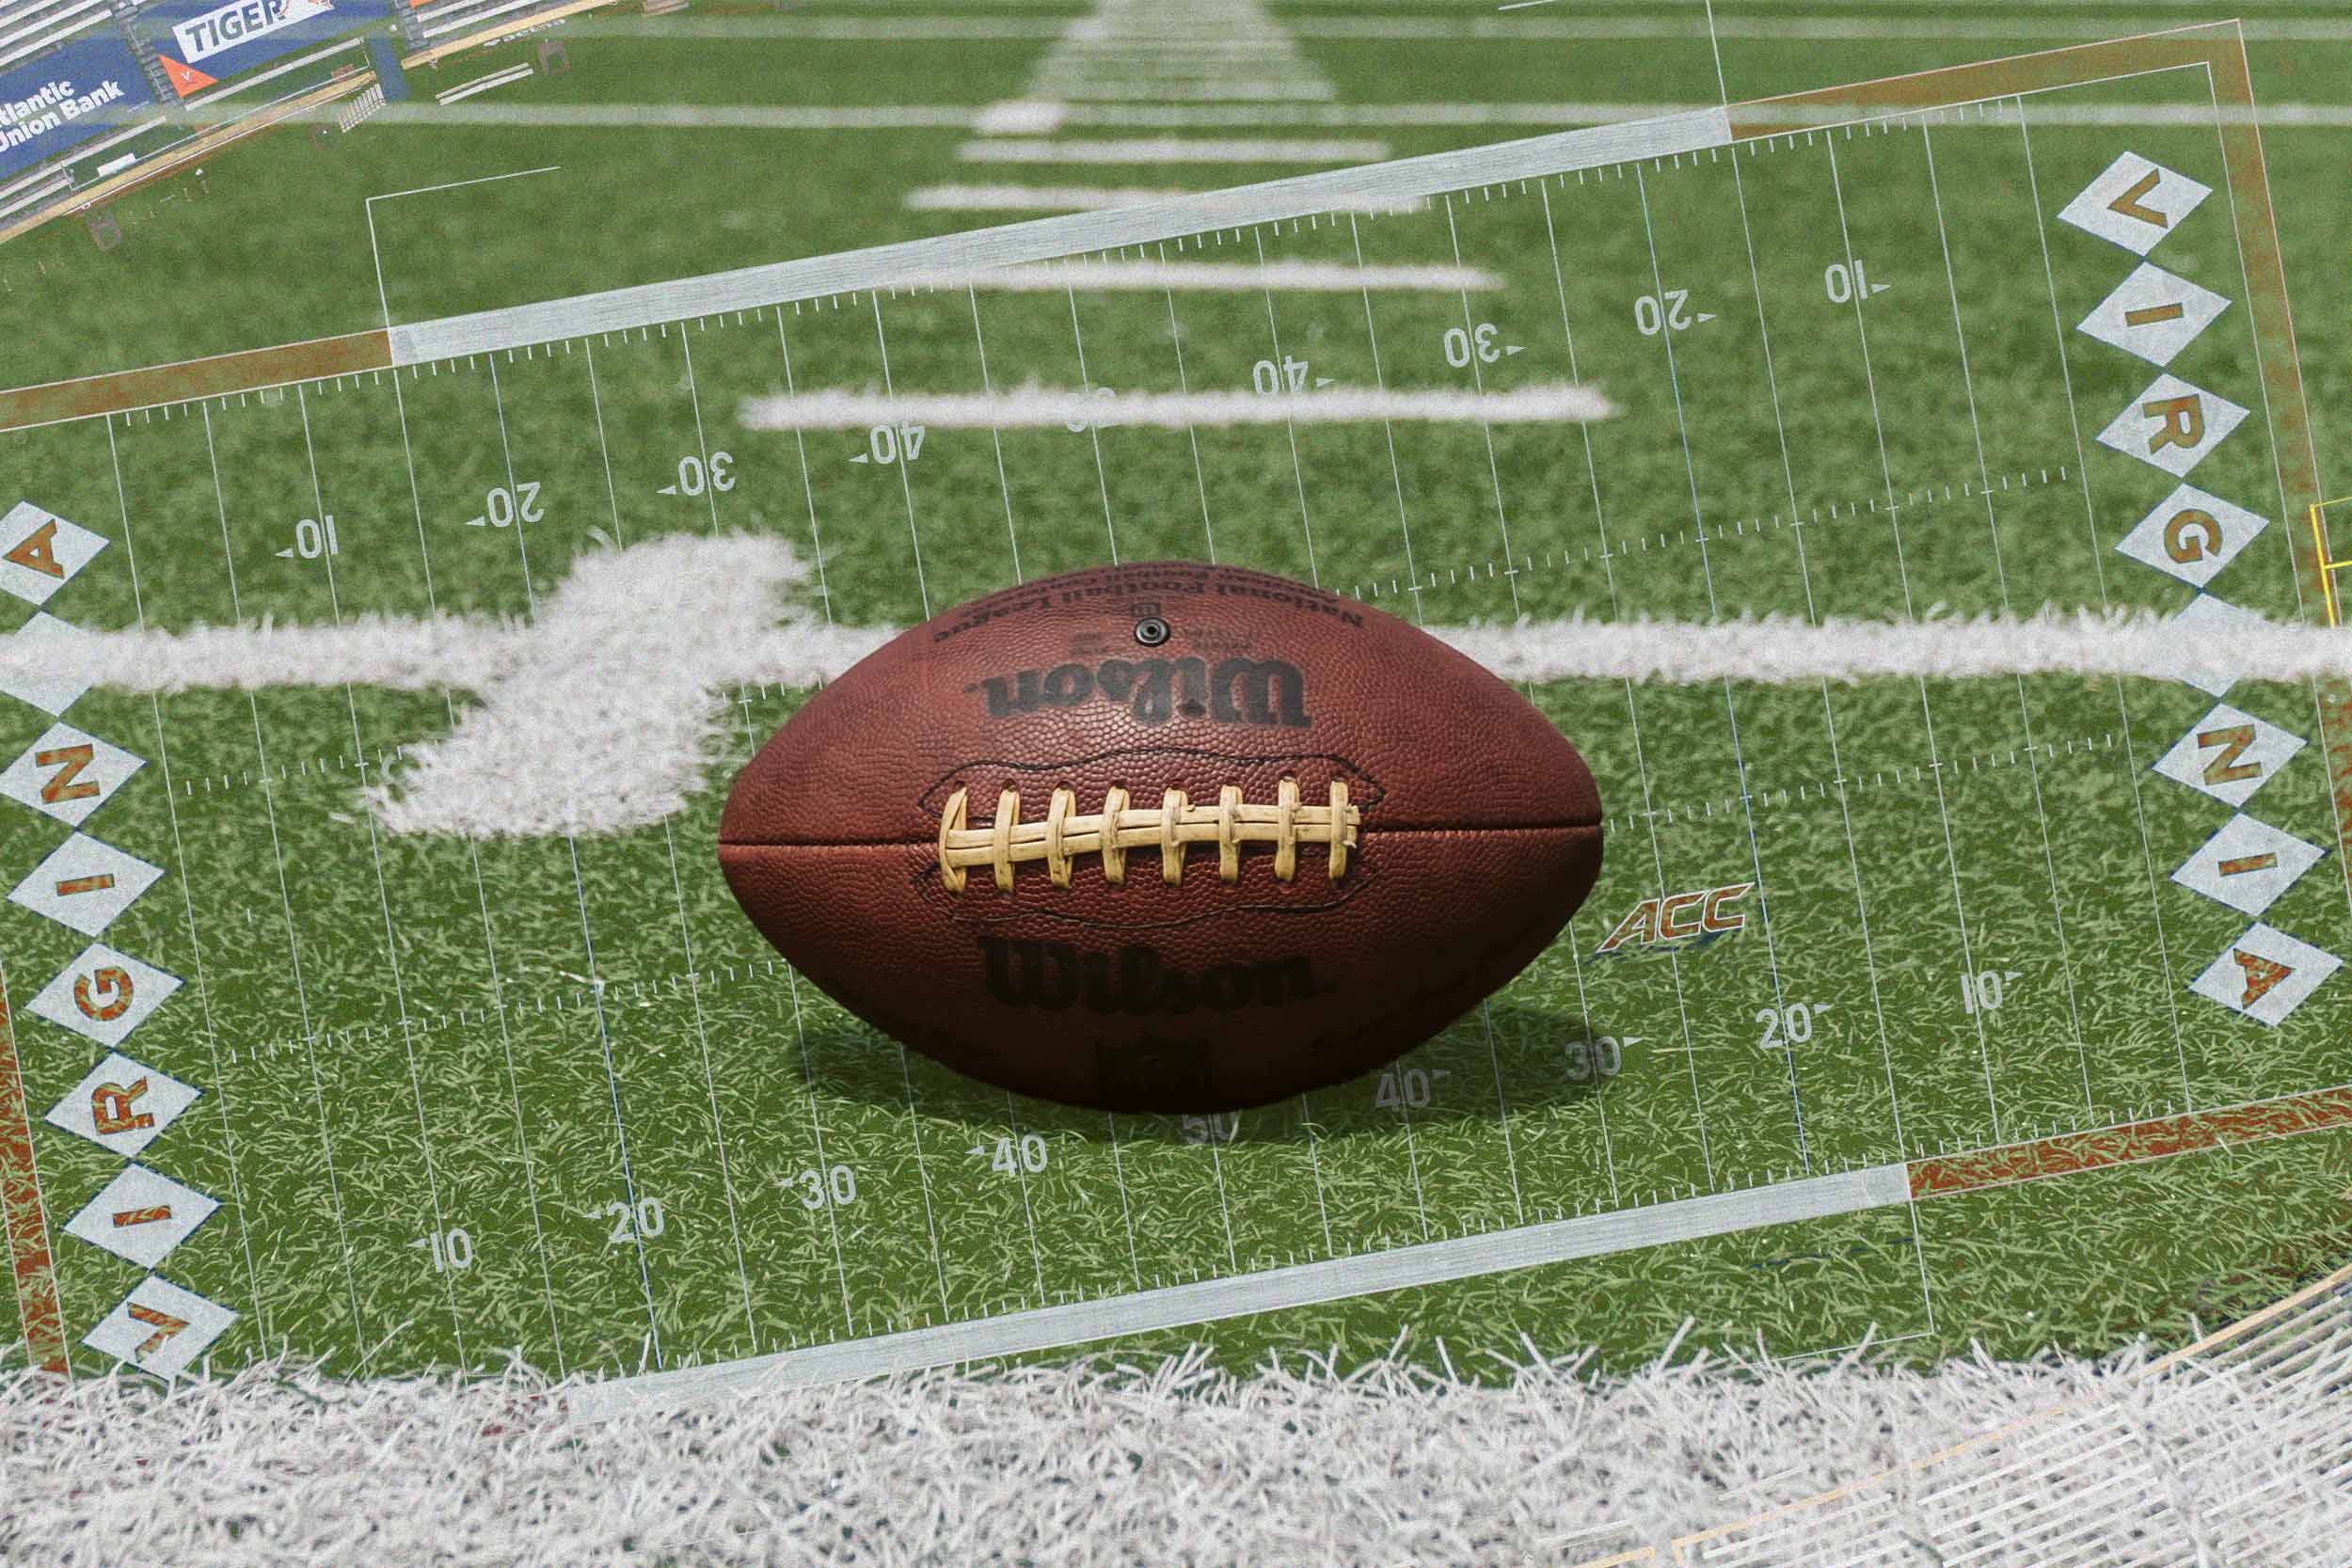 A football in a football field